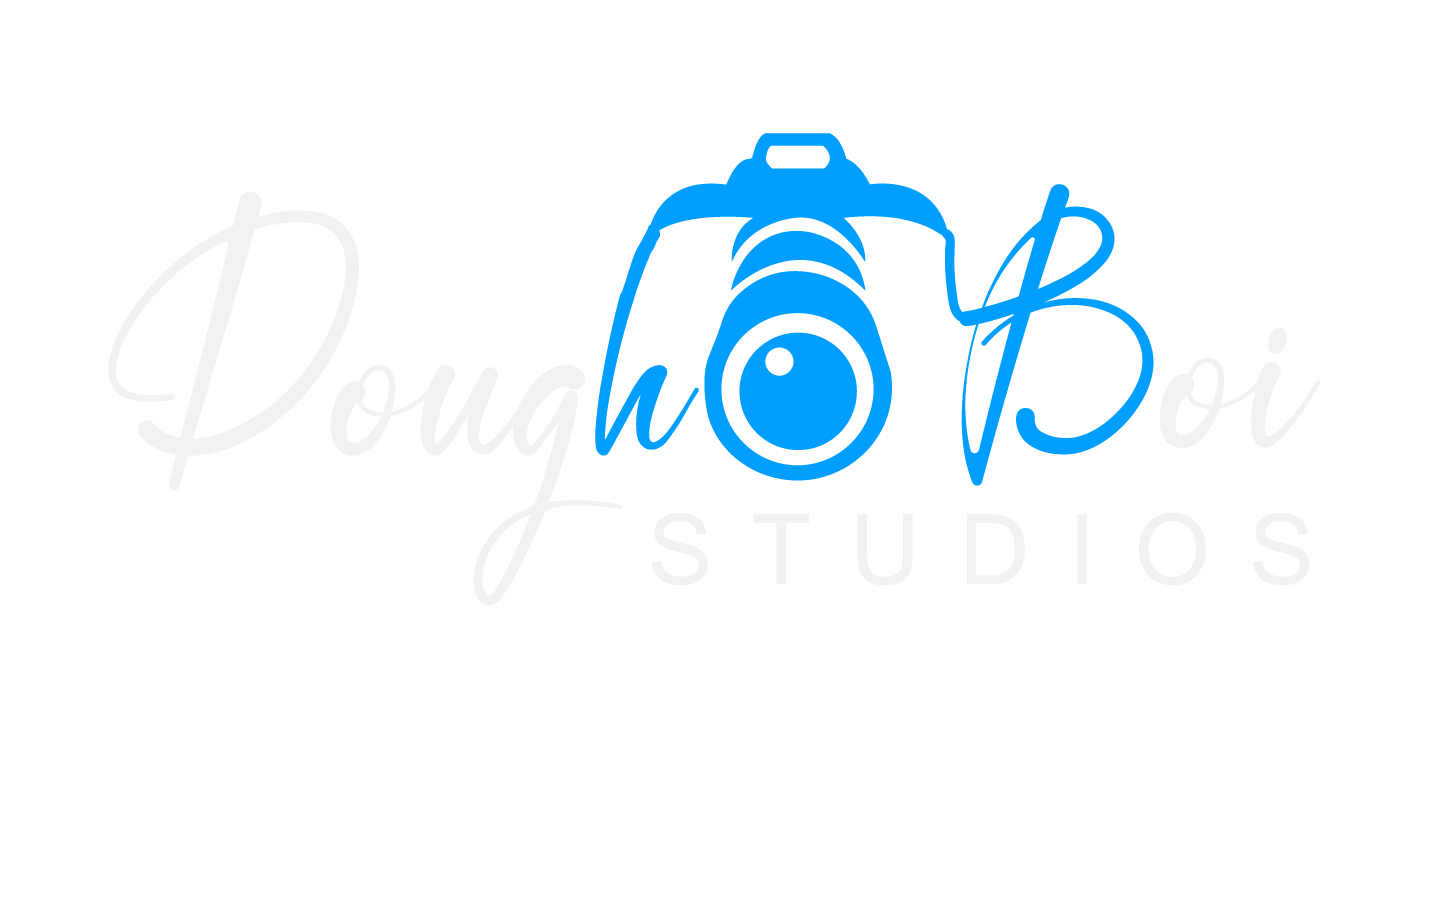 DoughBoi Studios